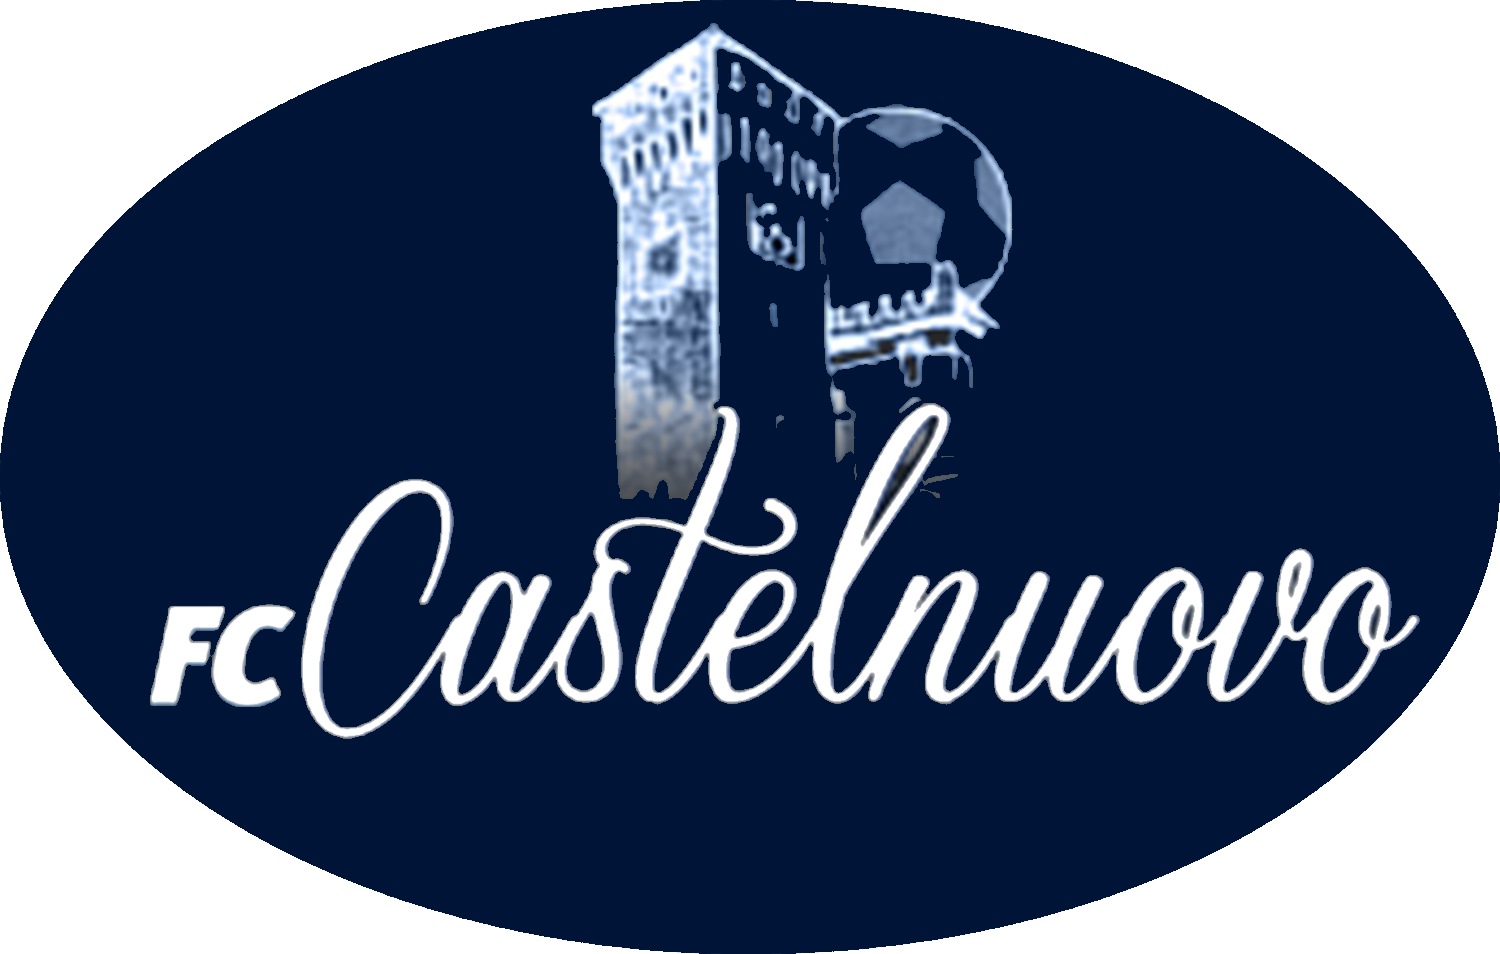 FC CASTELNUOVO v MODENESE CALCIO